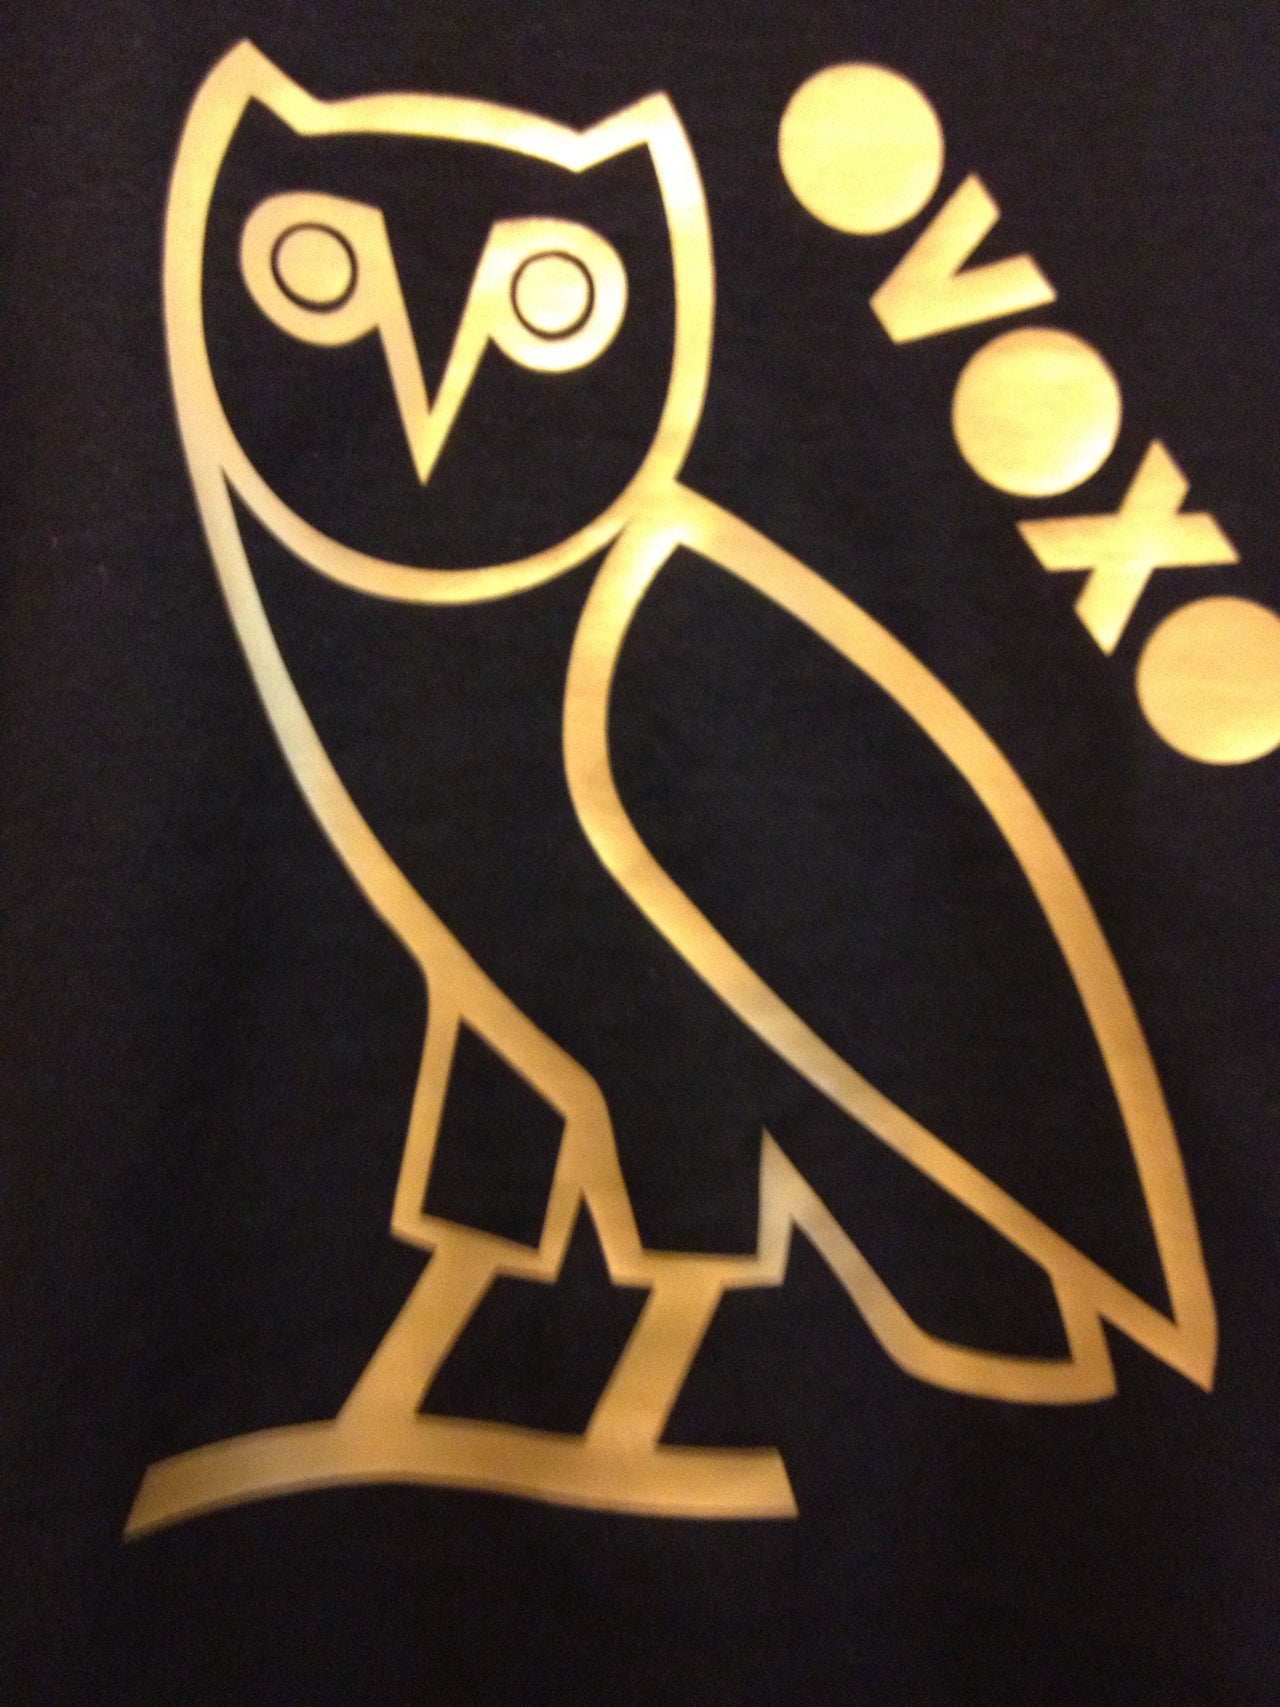 Ovo Drake October's Very Own Ovoxo Owl Gang Girls Tshirt: Gold Print on Black Womens Tshirt - TshirtNow.net - 4